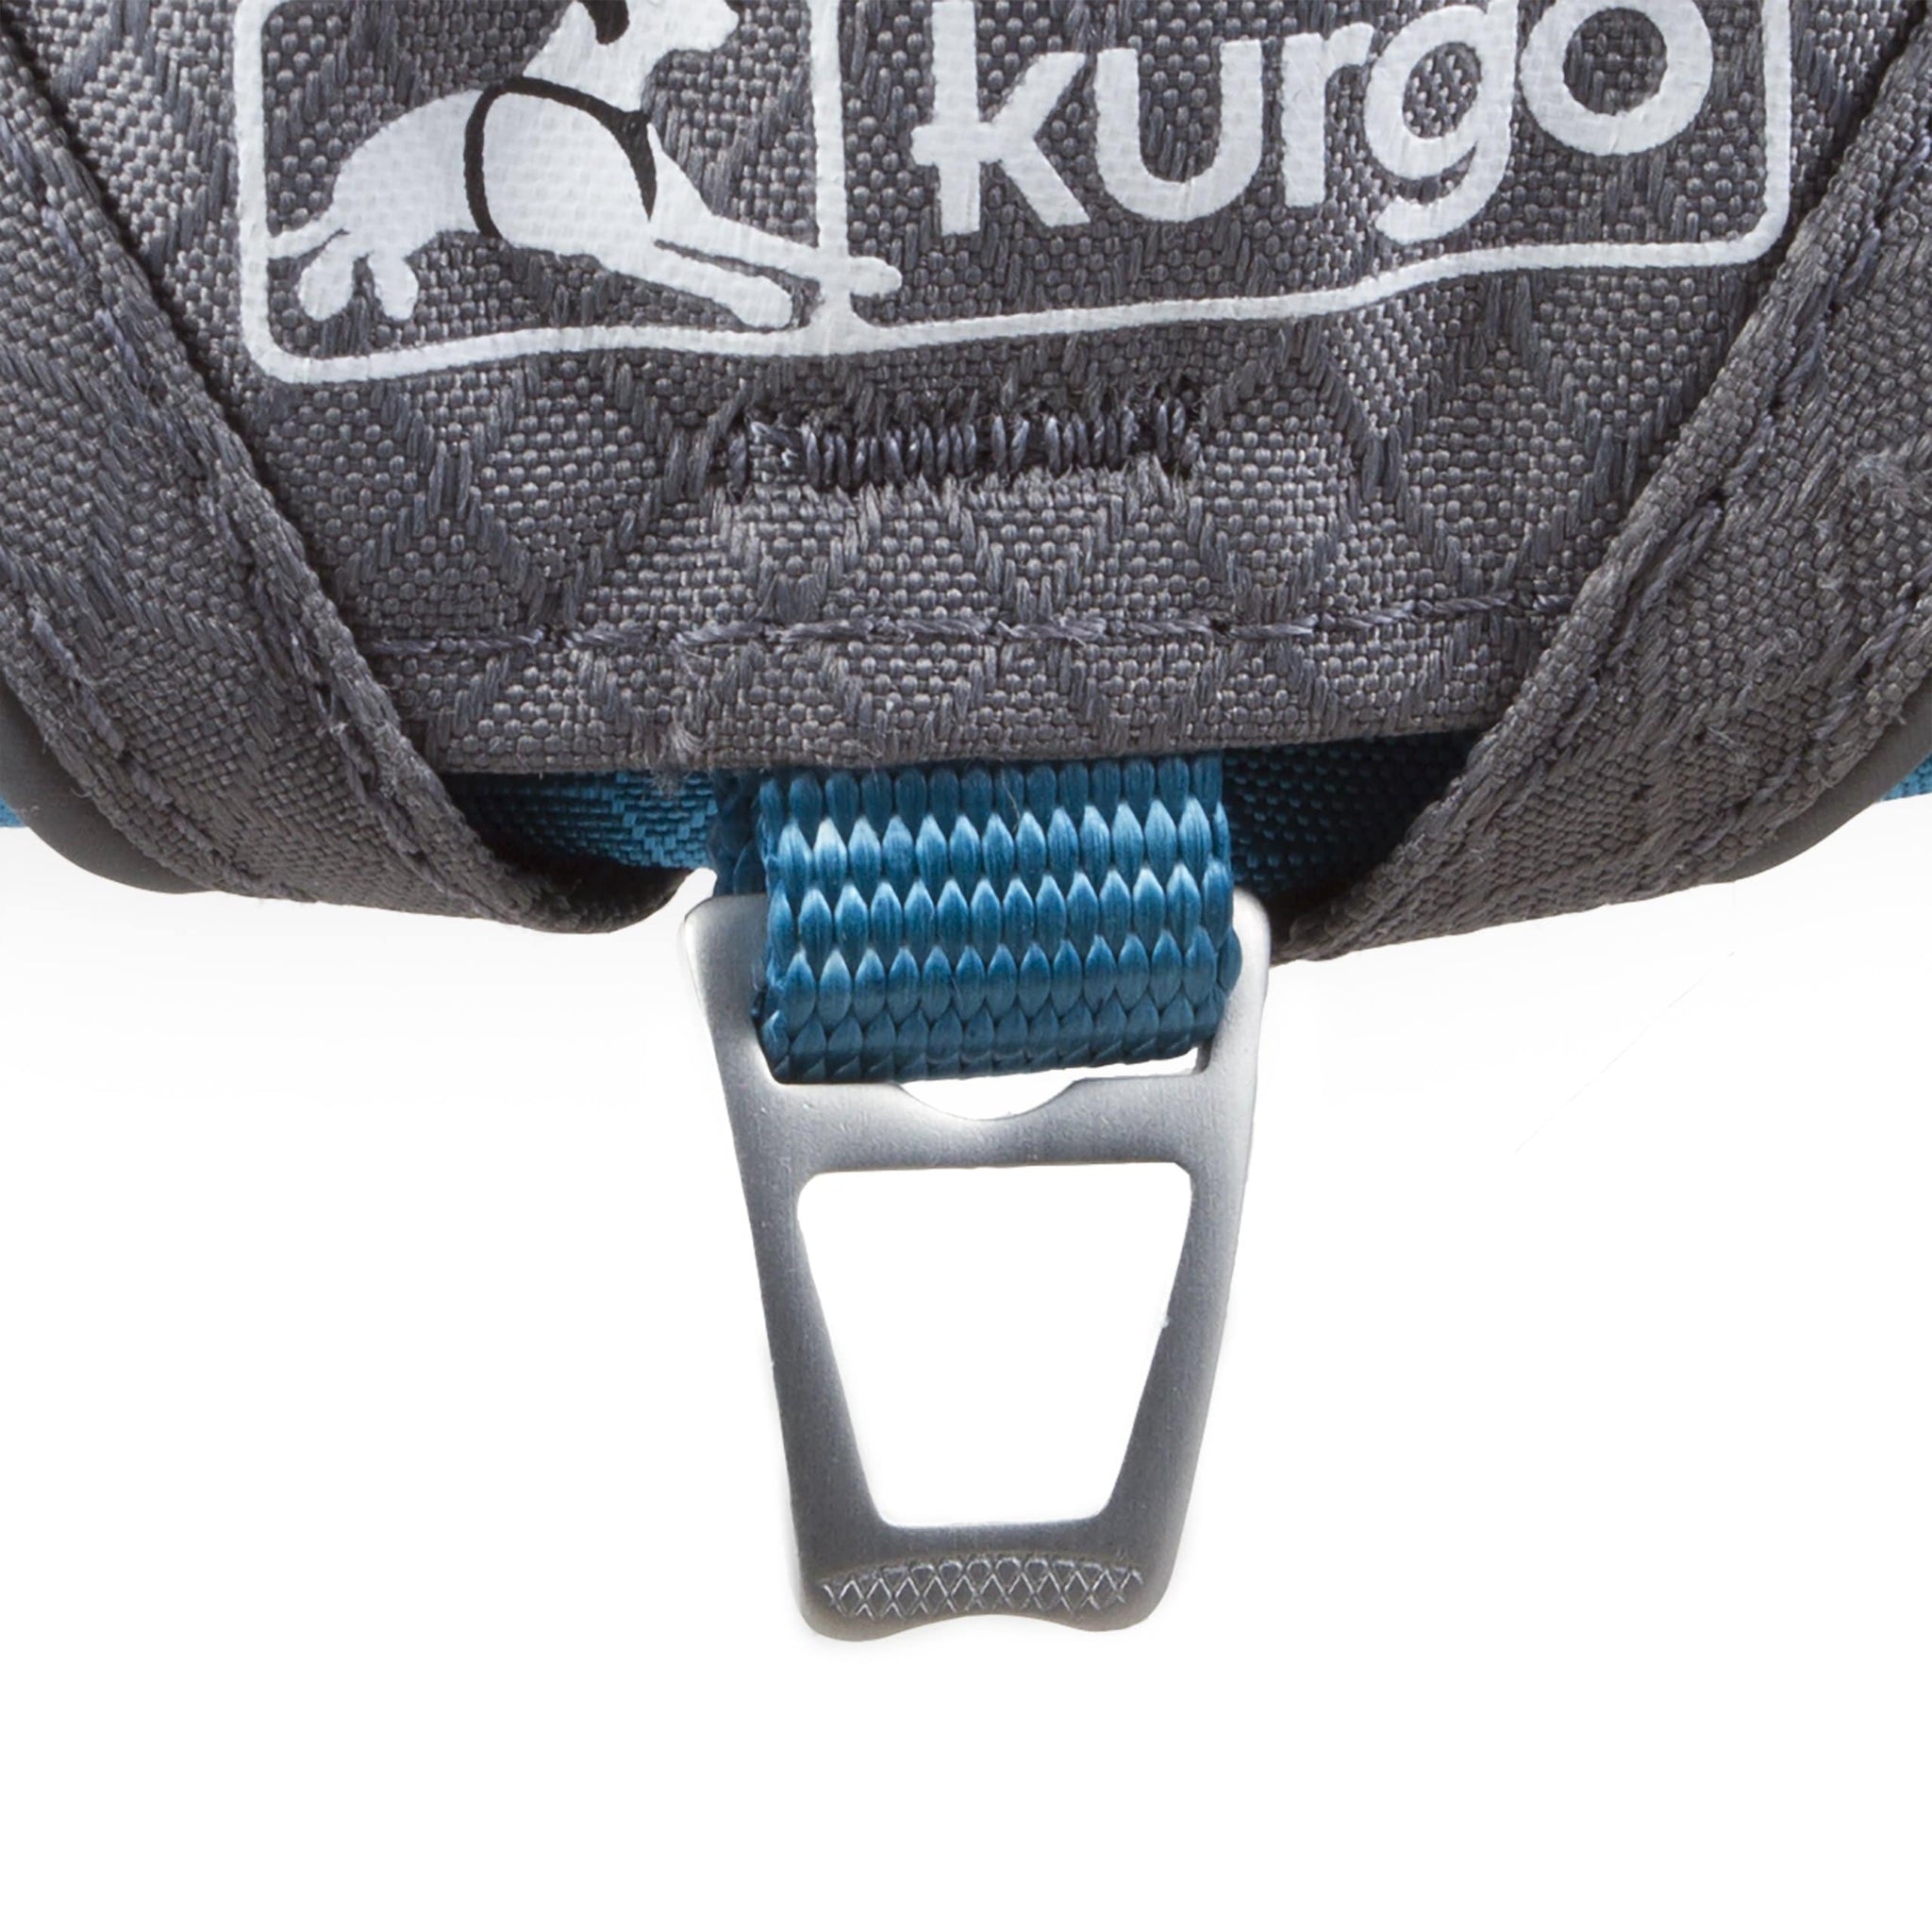 Image of the Kurgo Journey Air Harness hardware.